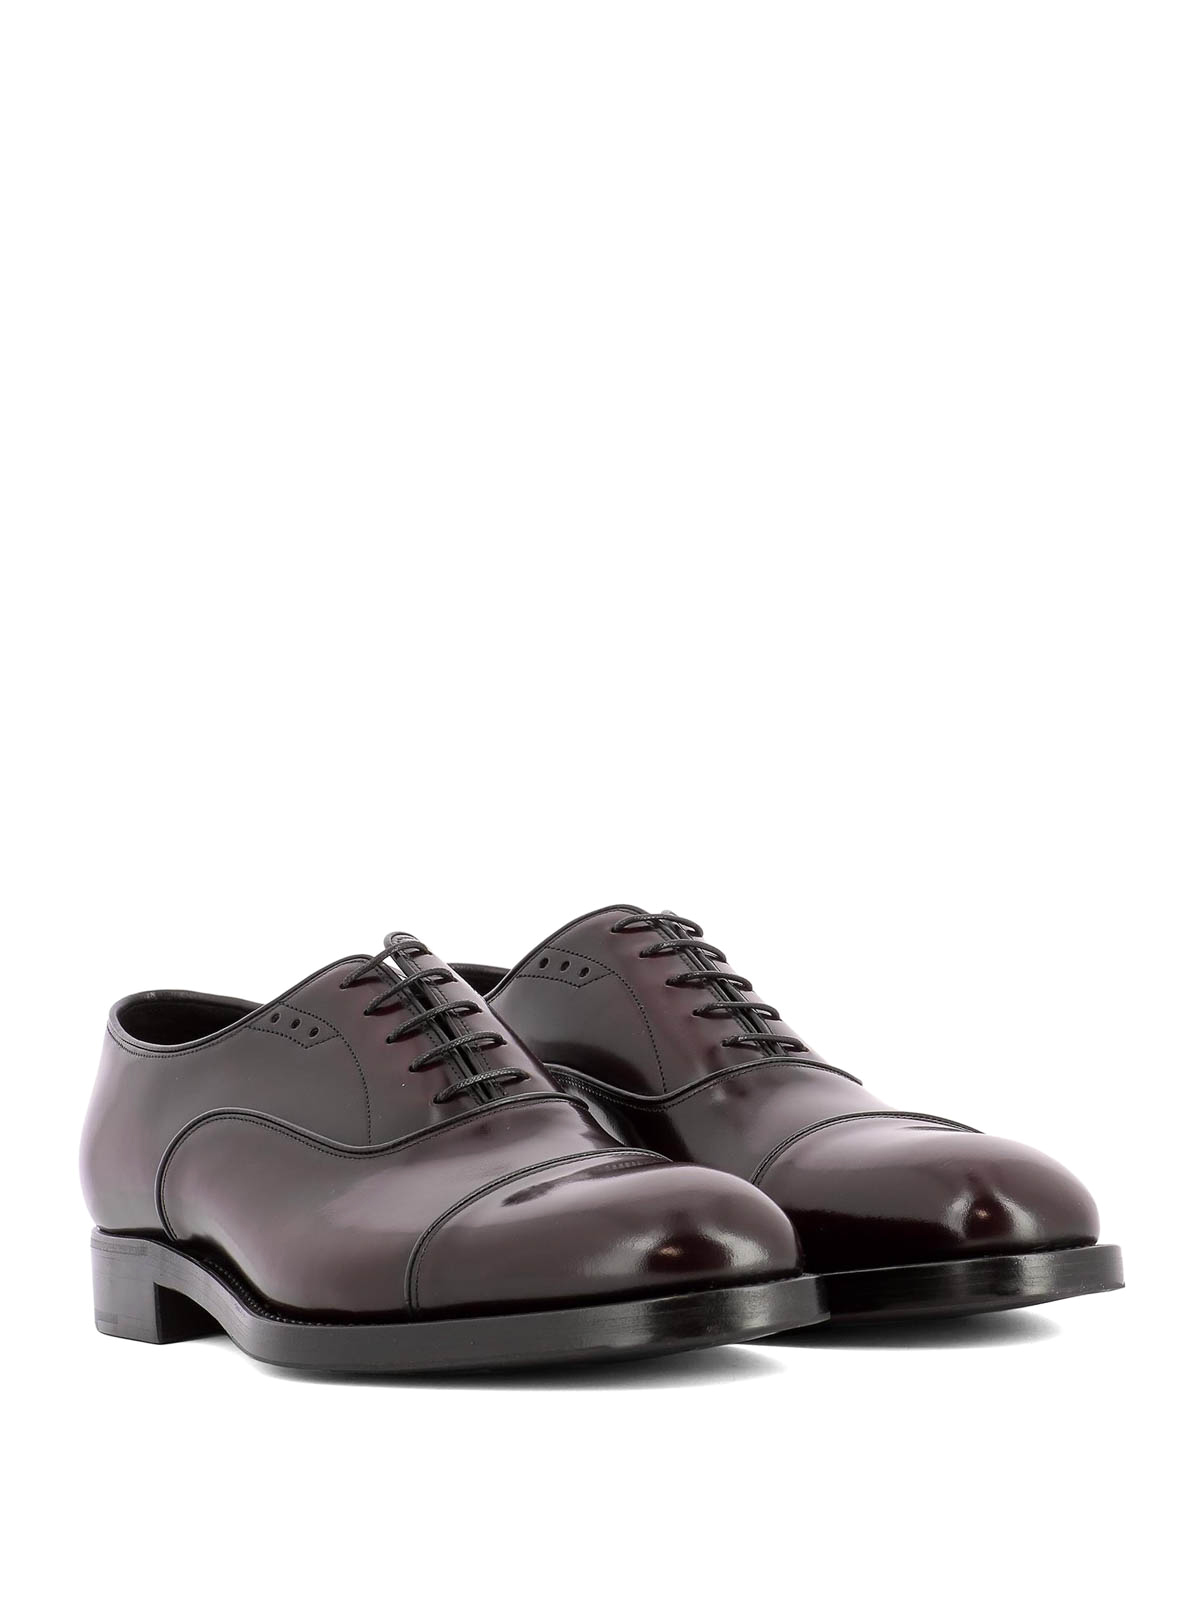 Prada - Burgundy leather Oxford shoes 